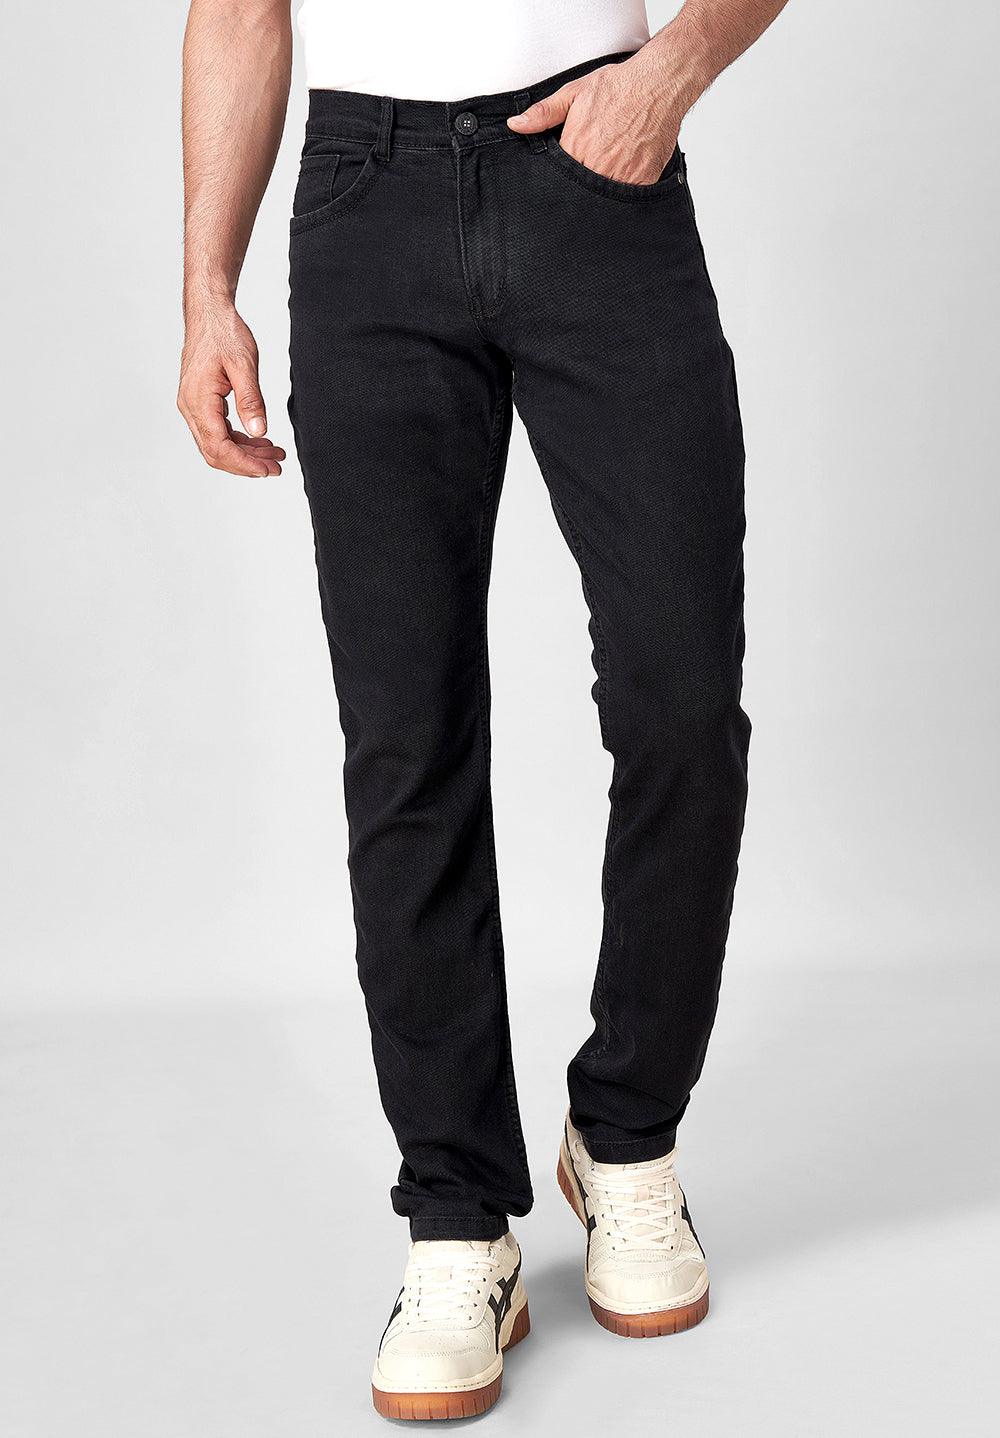 Black Slim Fit Jeans - D42930